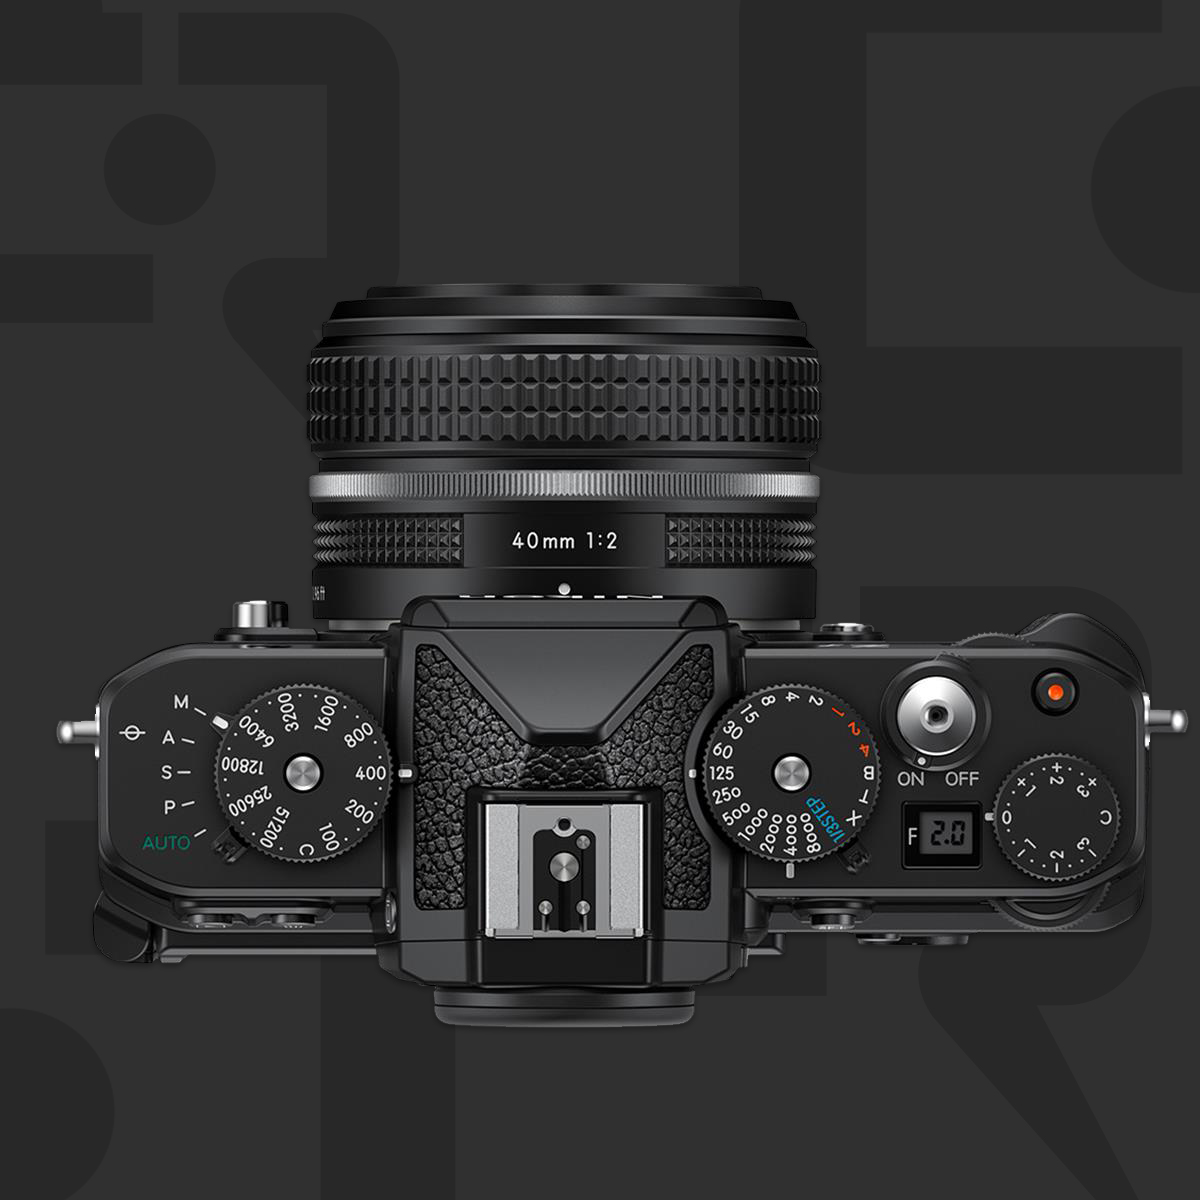 nikonzf 04 - Nikon officially announces the Z f retro inspired camera body